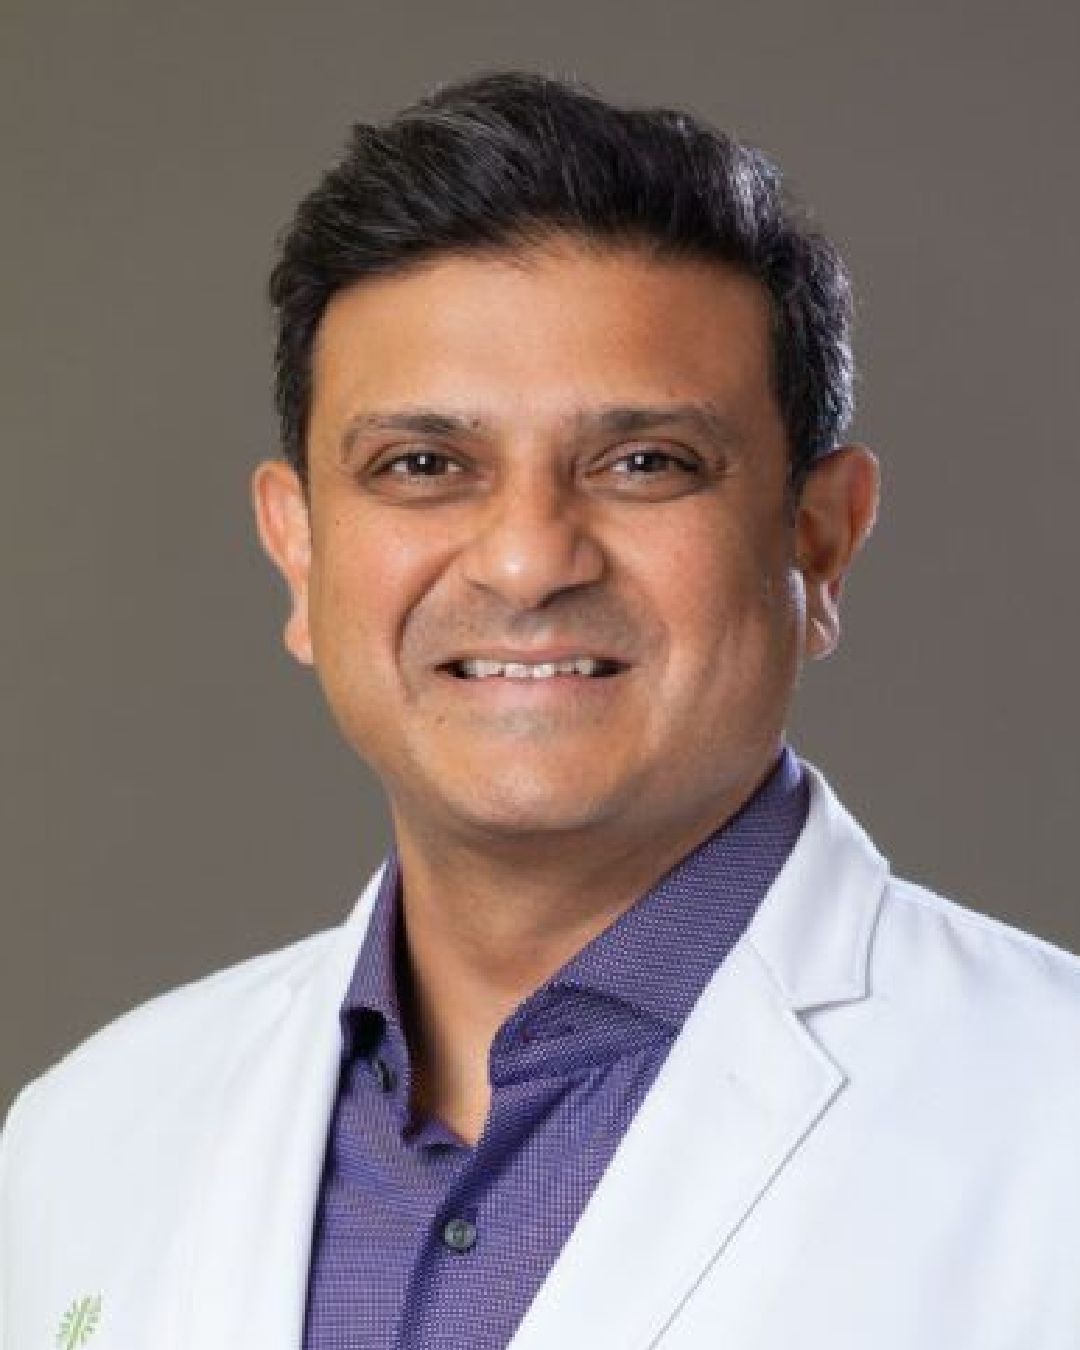 Dr. Swamy Venuturupalli in white lab coat